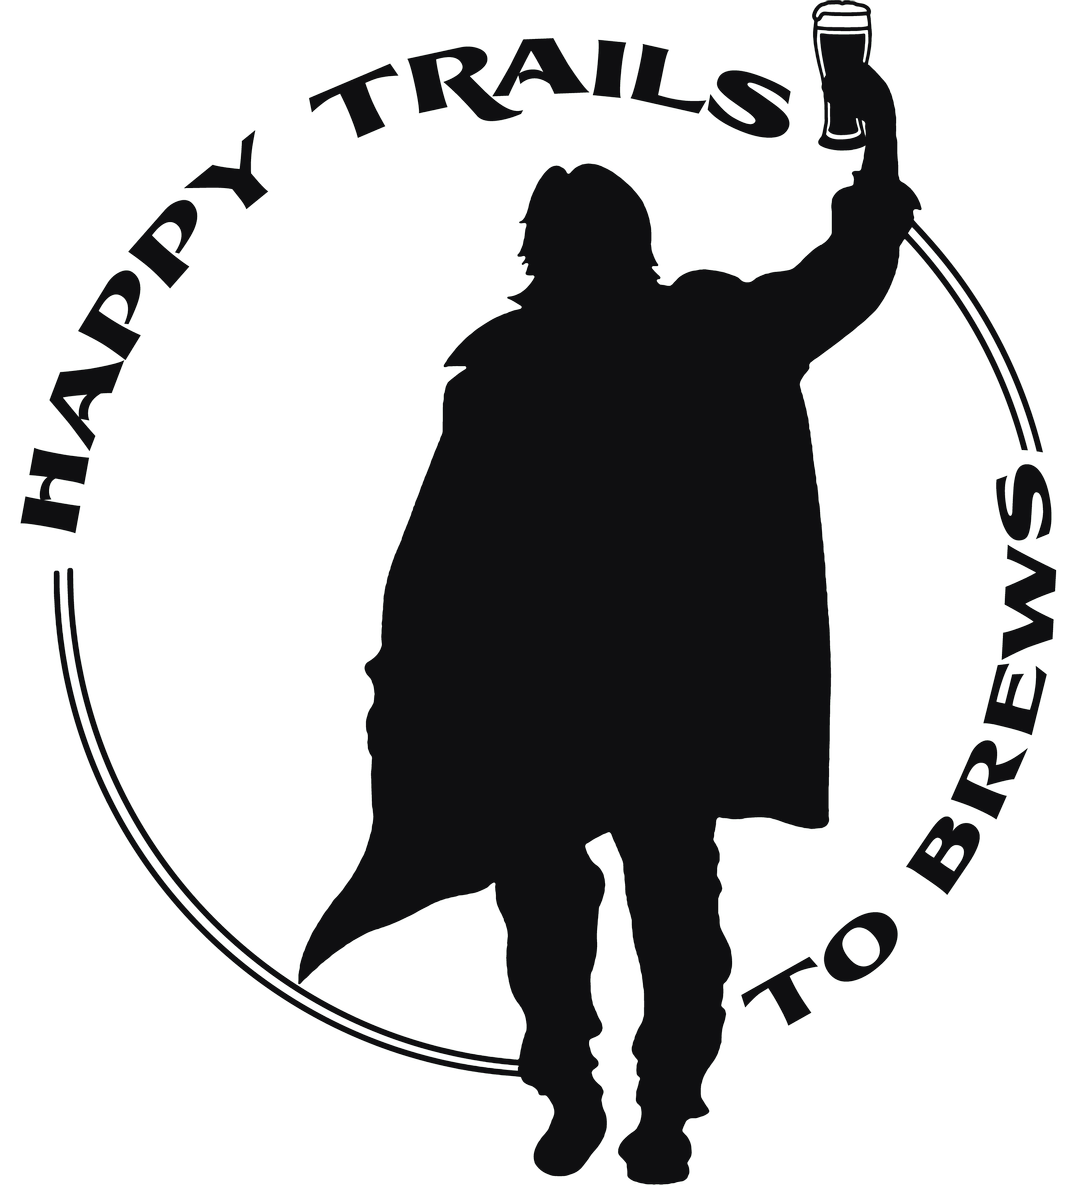 Happy Trails to Brews avatar